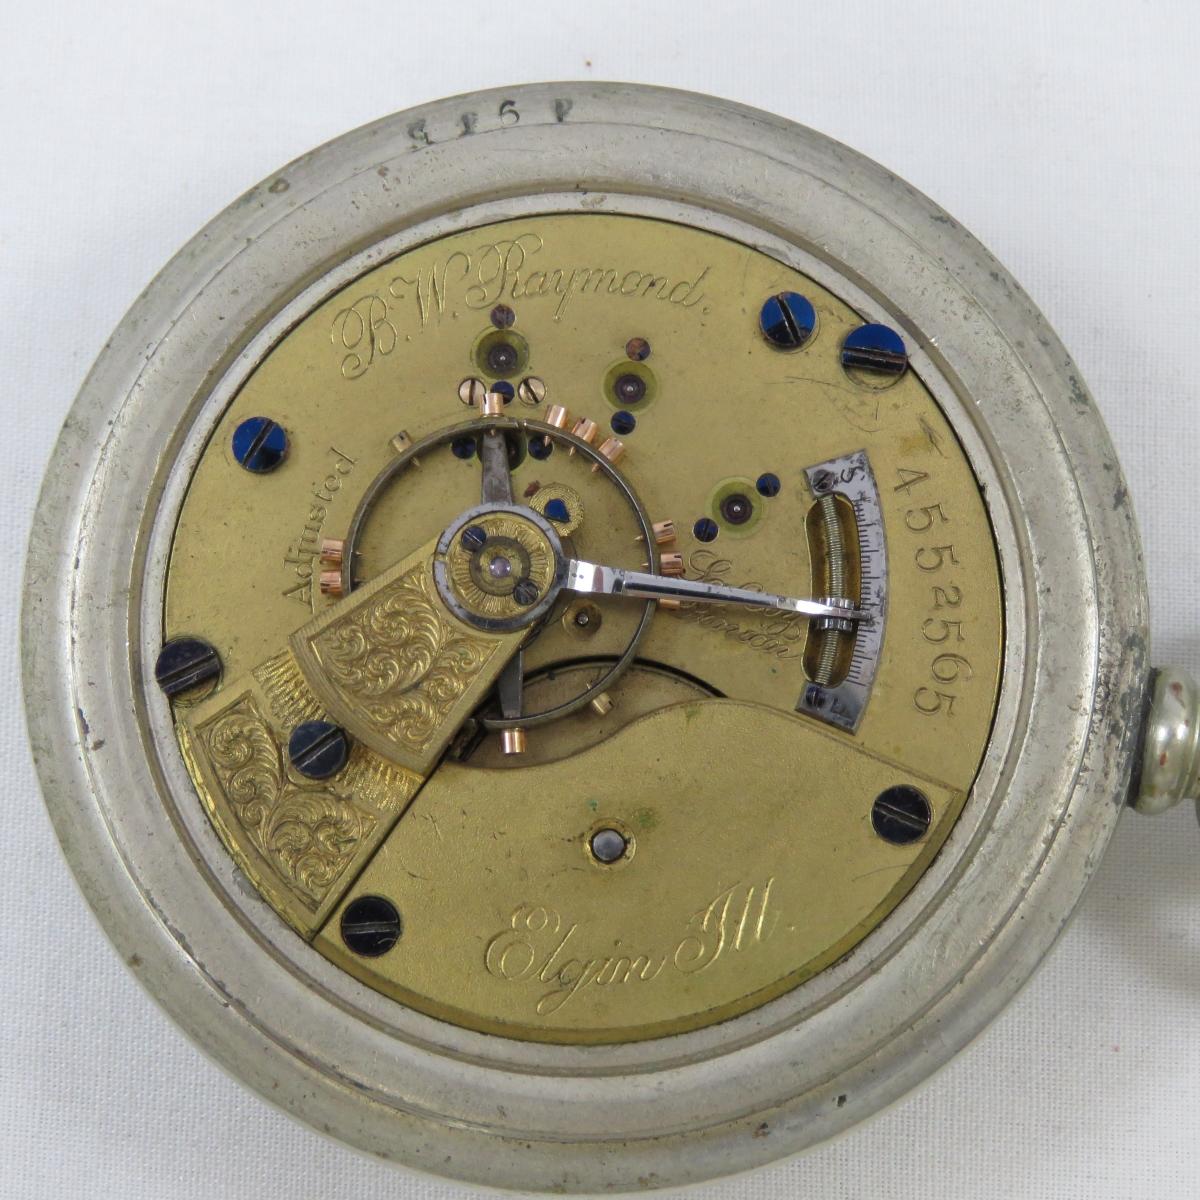 2 Antique Elgin Open Face Pocket Watches